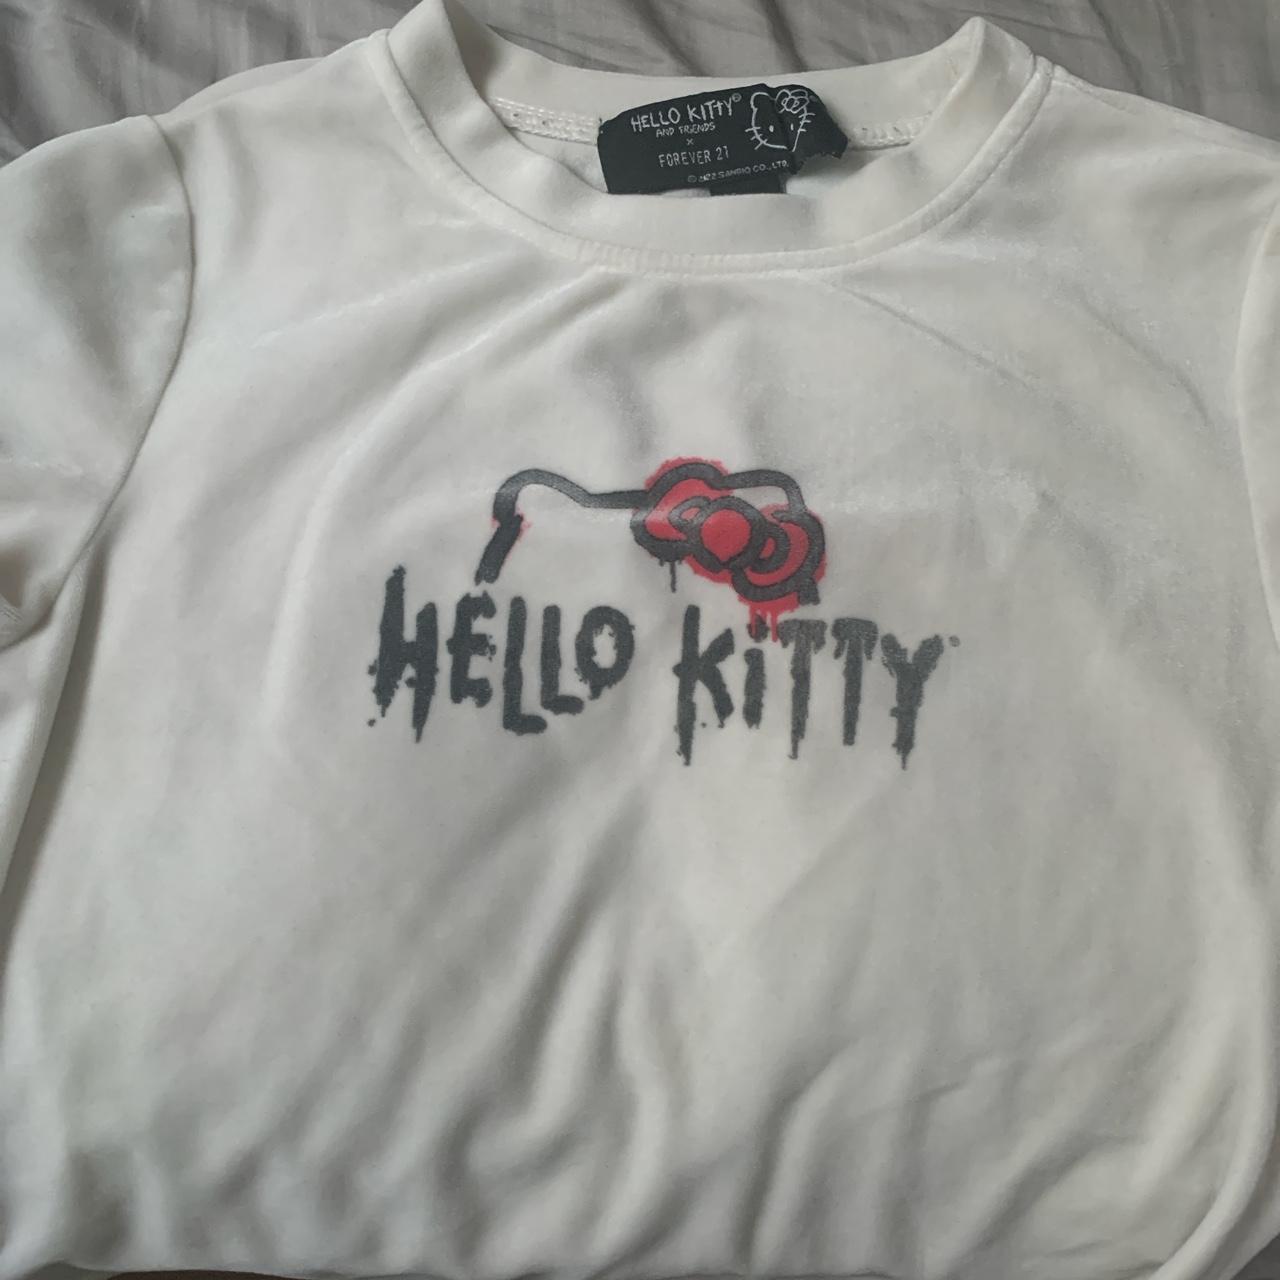 HELLO KITTY X FOREVER 21 - Depop